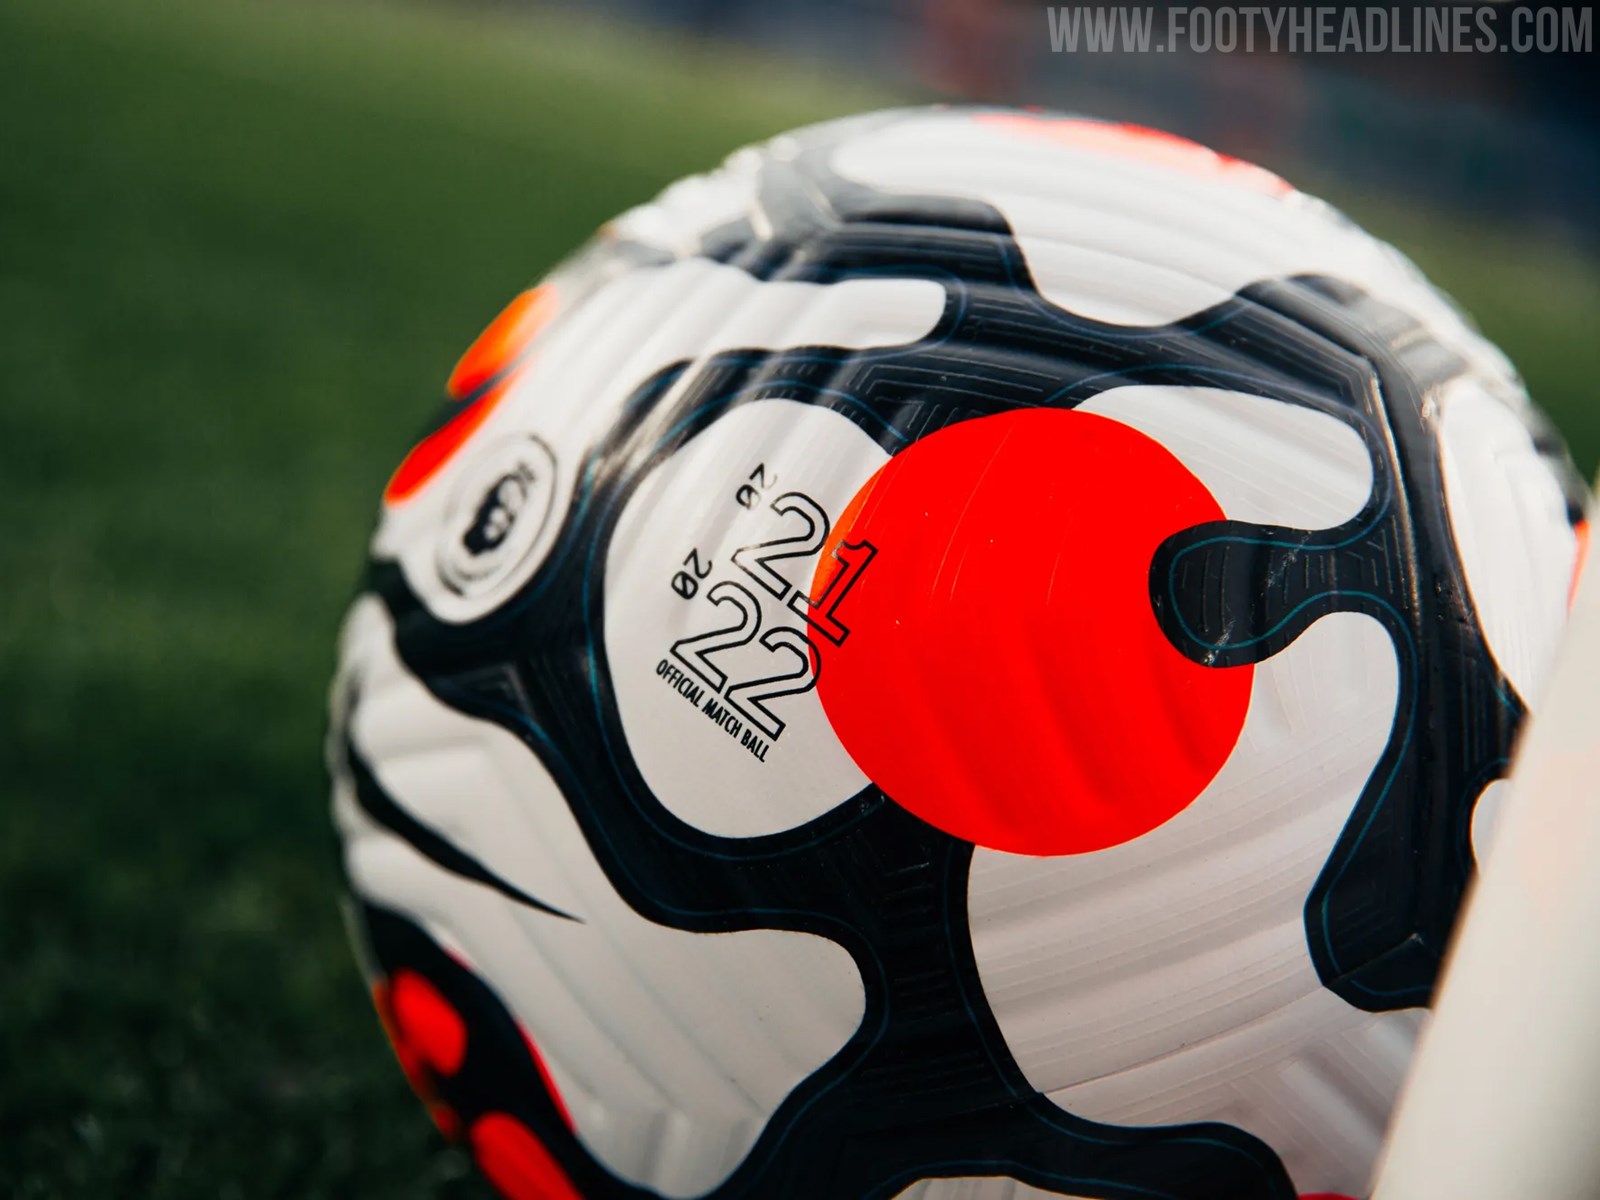 Bola de Futebol Nike Campeonato Inglês Premier League 21/22 - Sportset